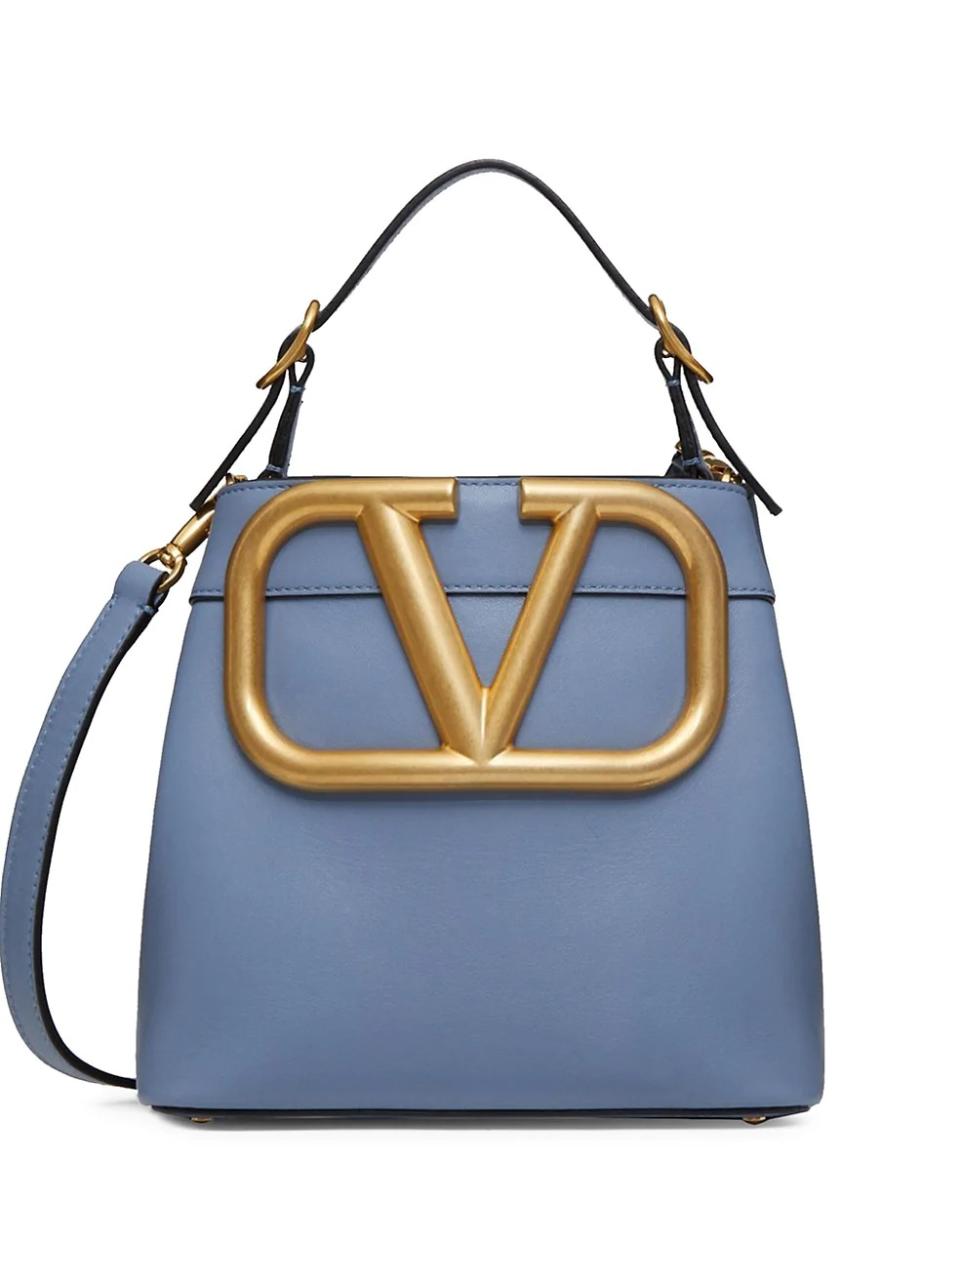 Valentino Garavani Supervee Leather Top Handle Bag